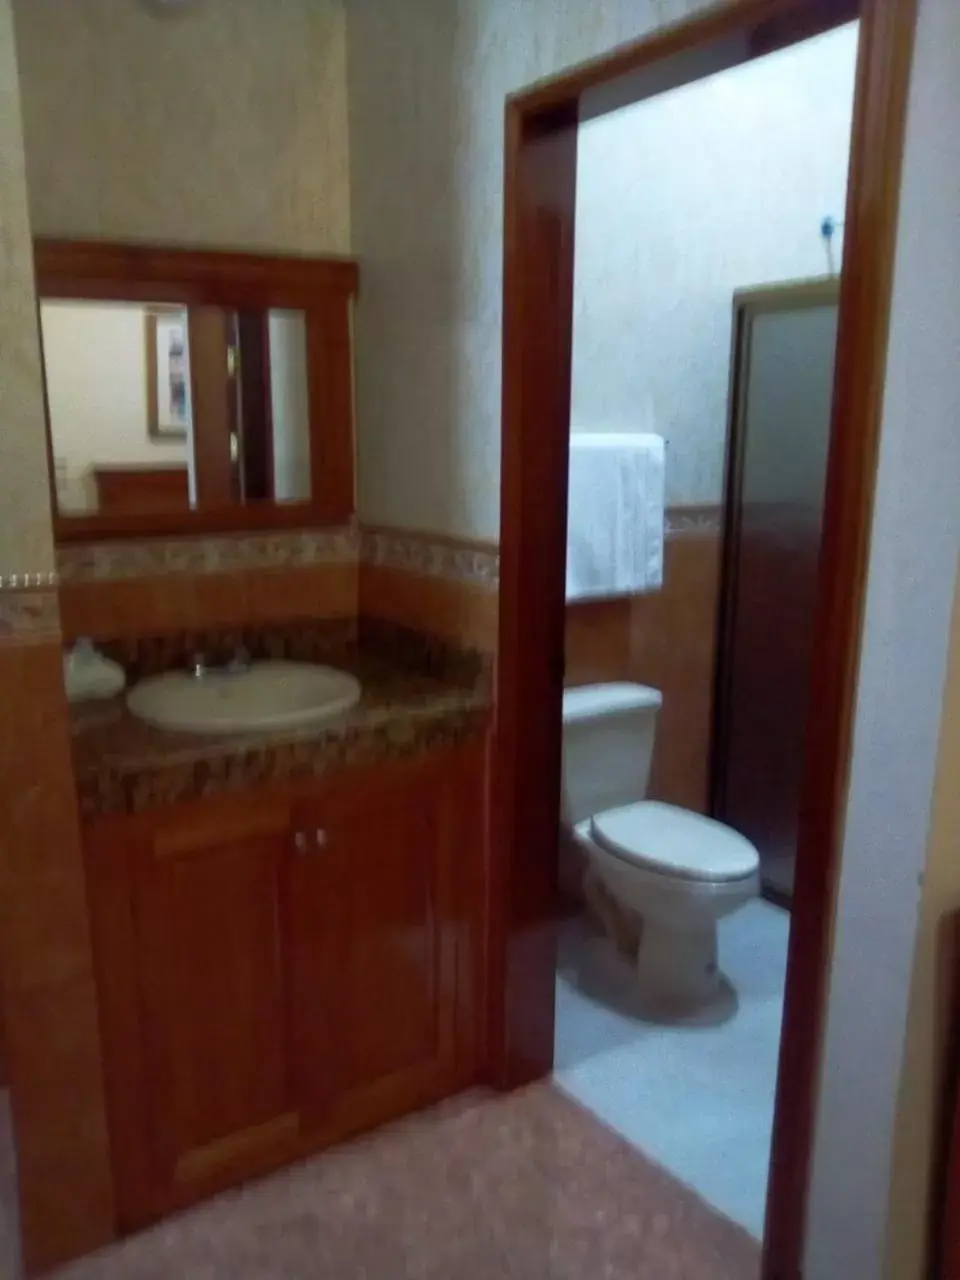 Bathroom in Hotel Santa Elena